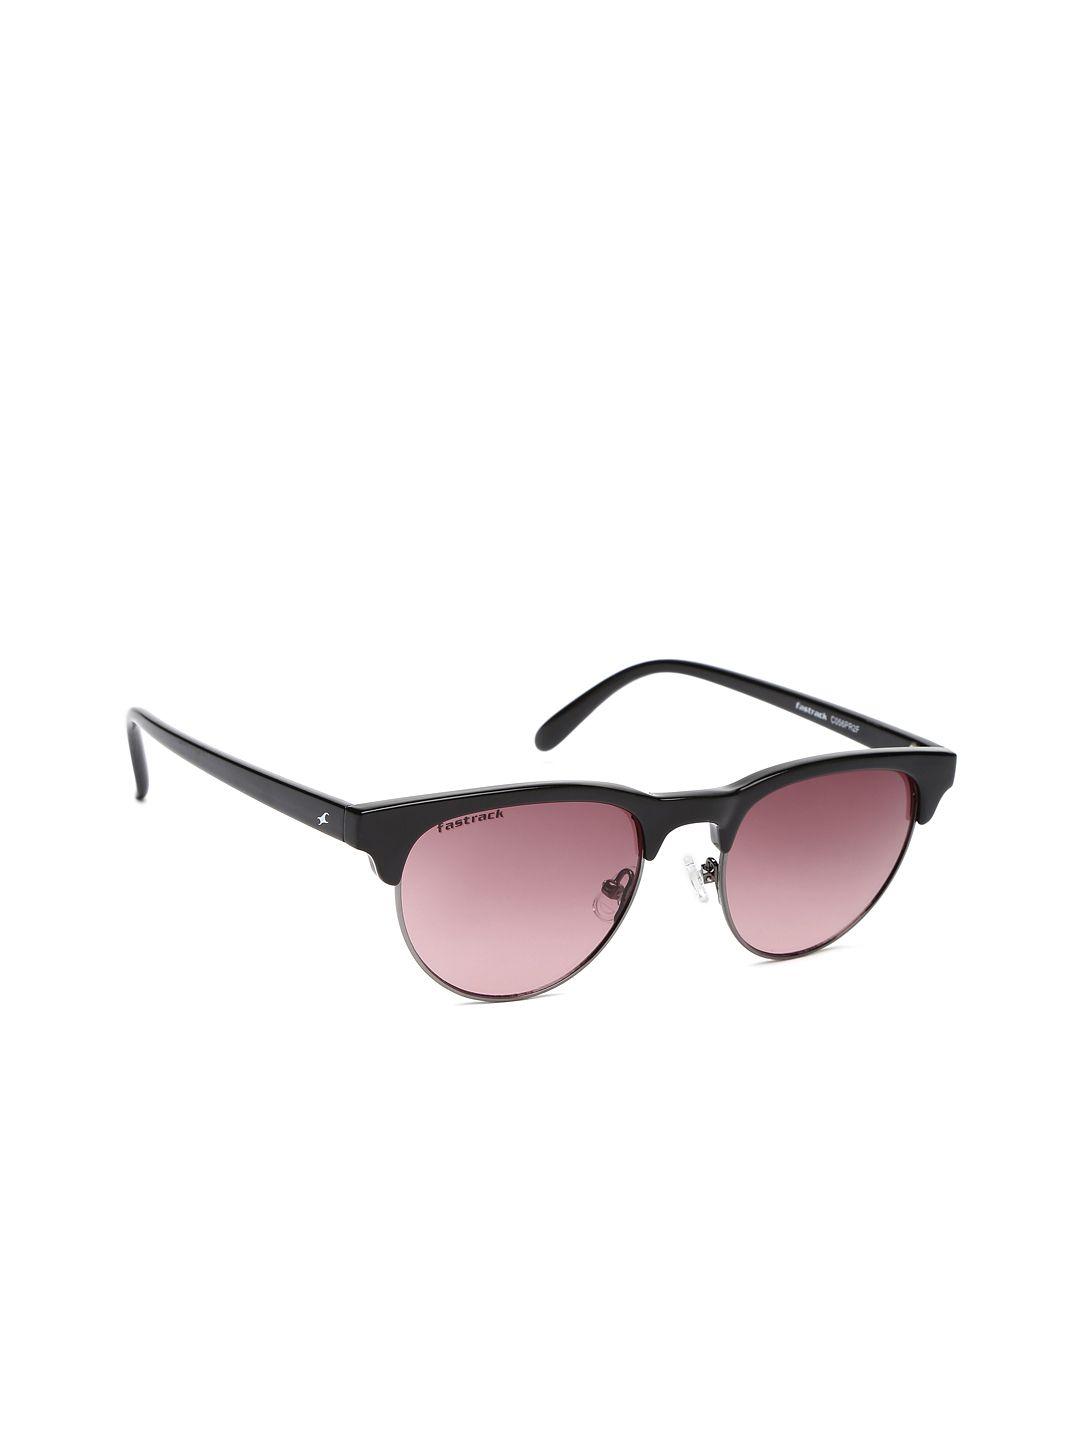 fastrack women round sunglasses c056pr2f